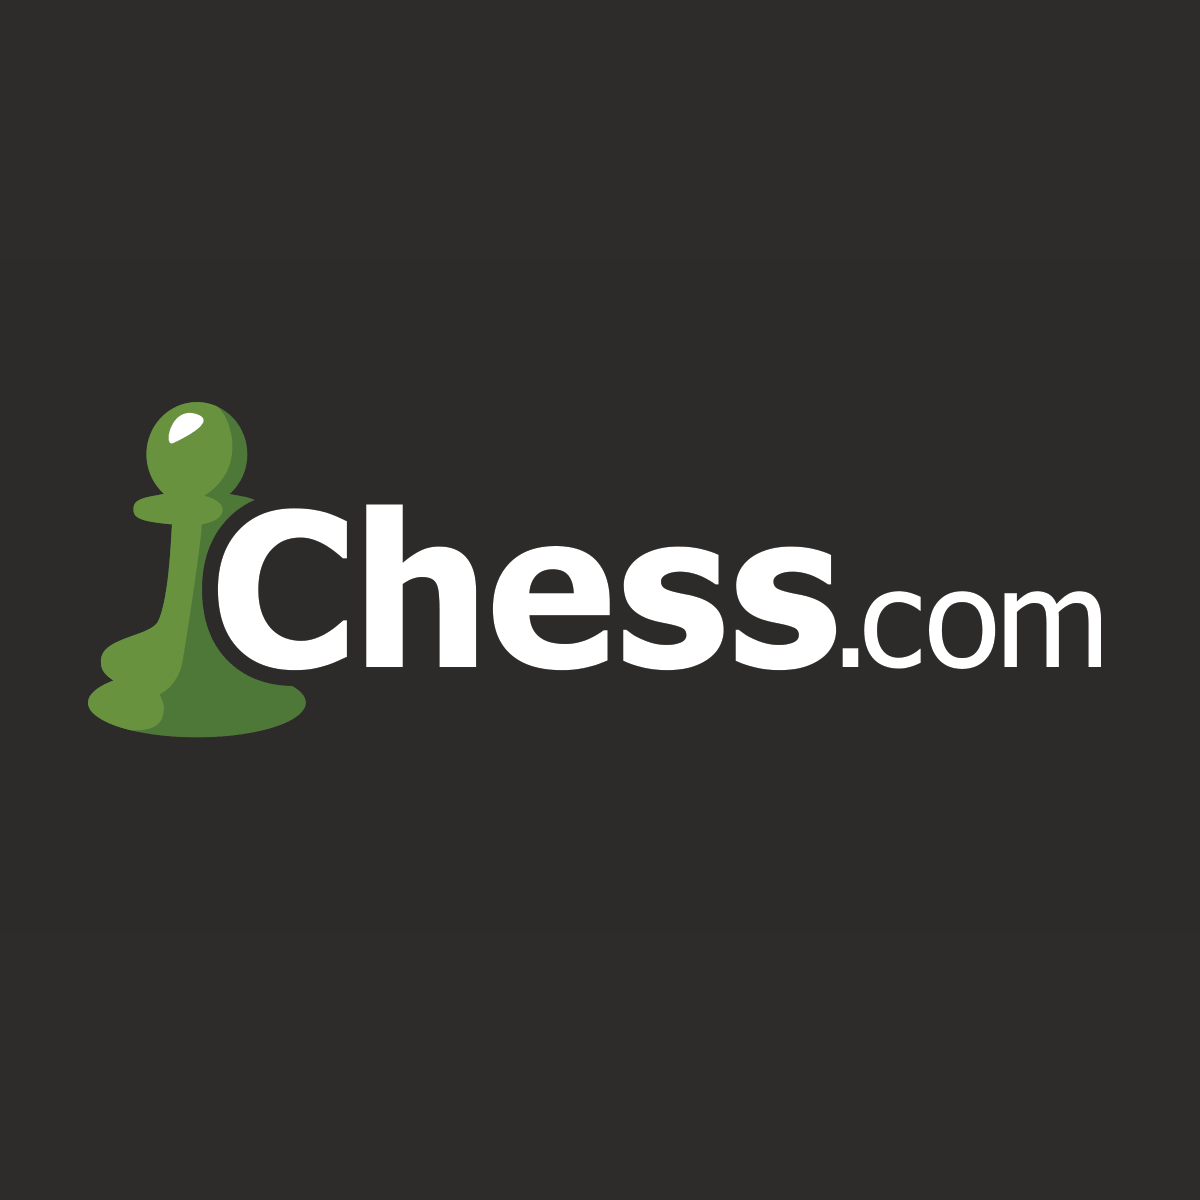 Ooget com. Chess.com. Значок Chess.com. Логотип ческом.